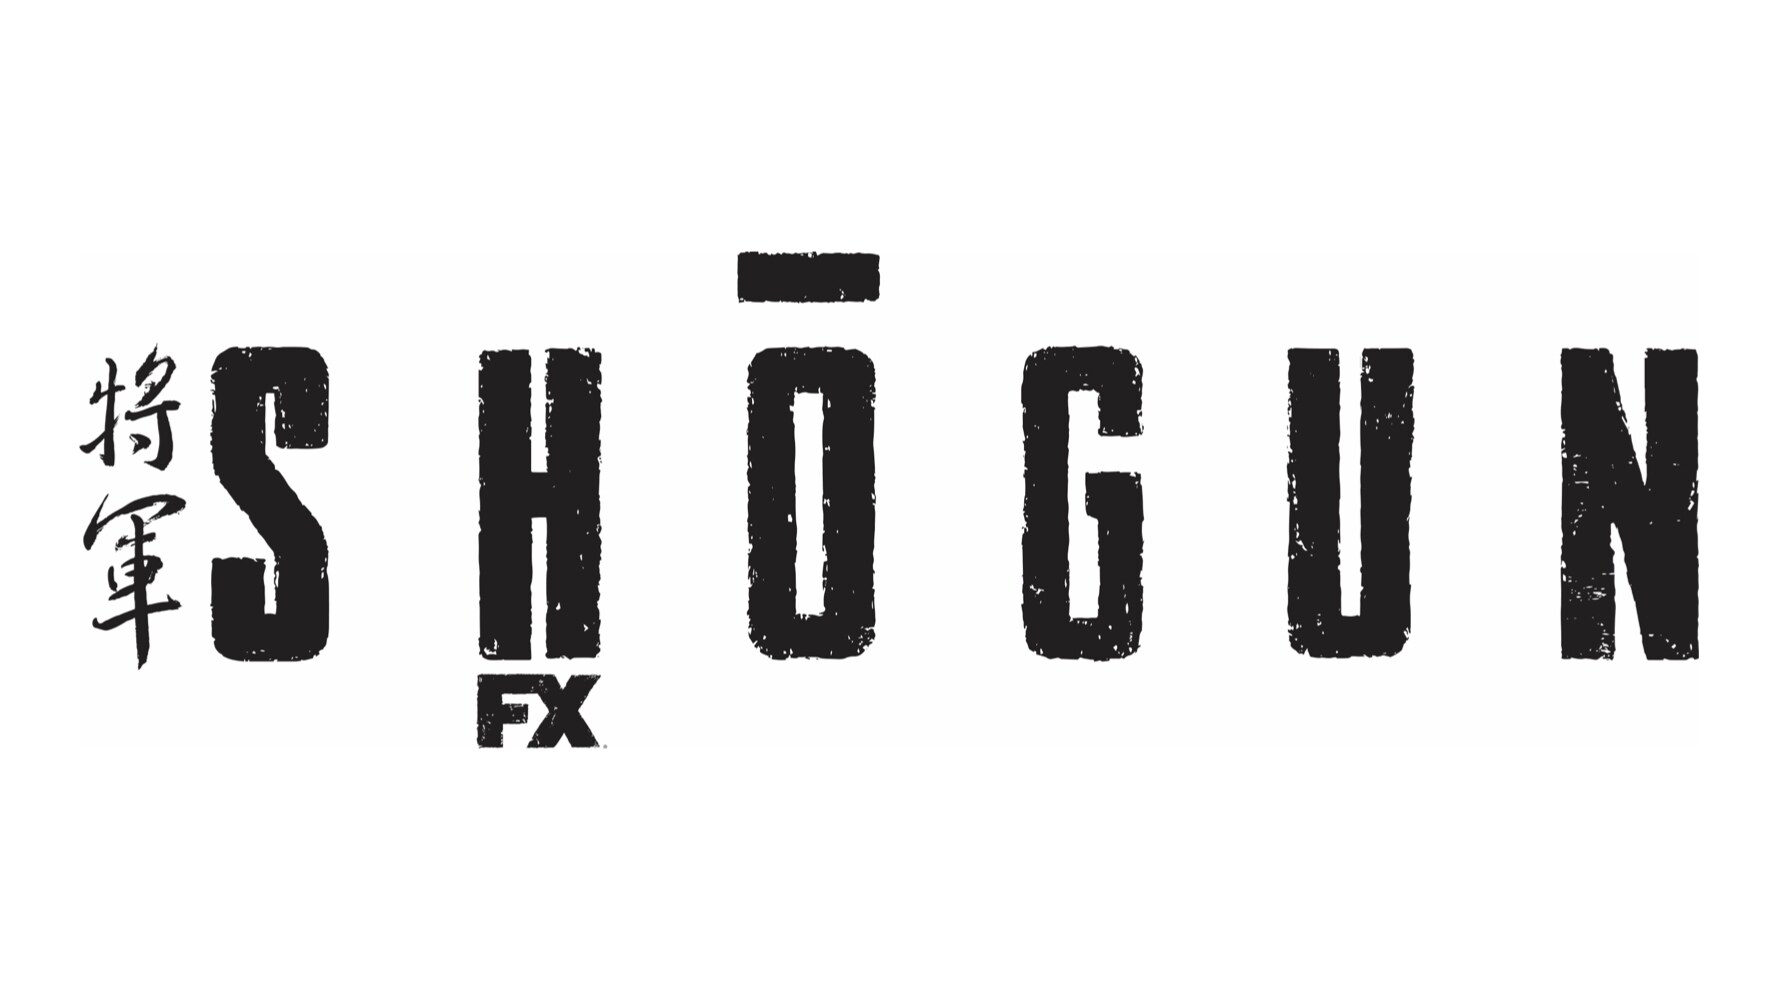 Shogun Logo